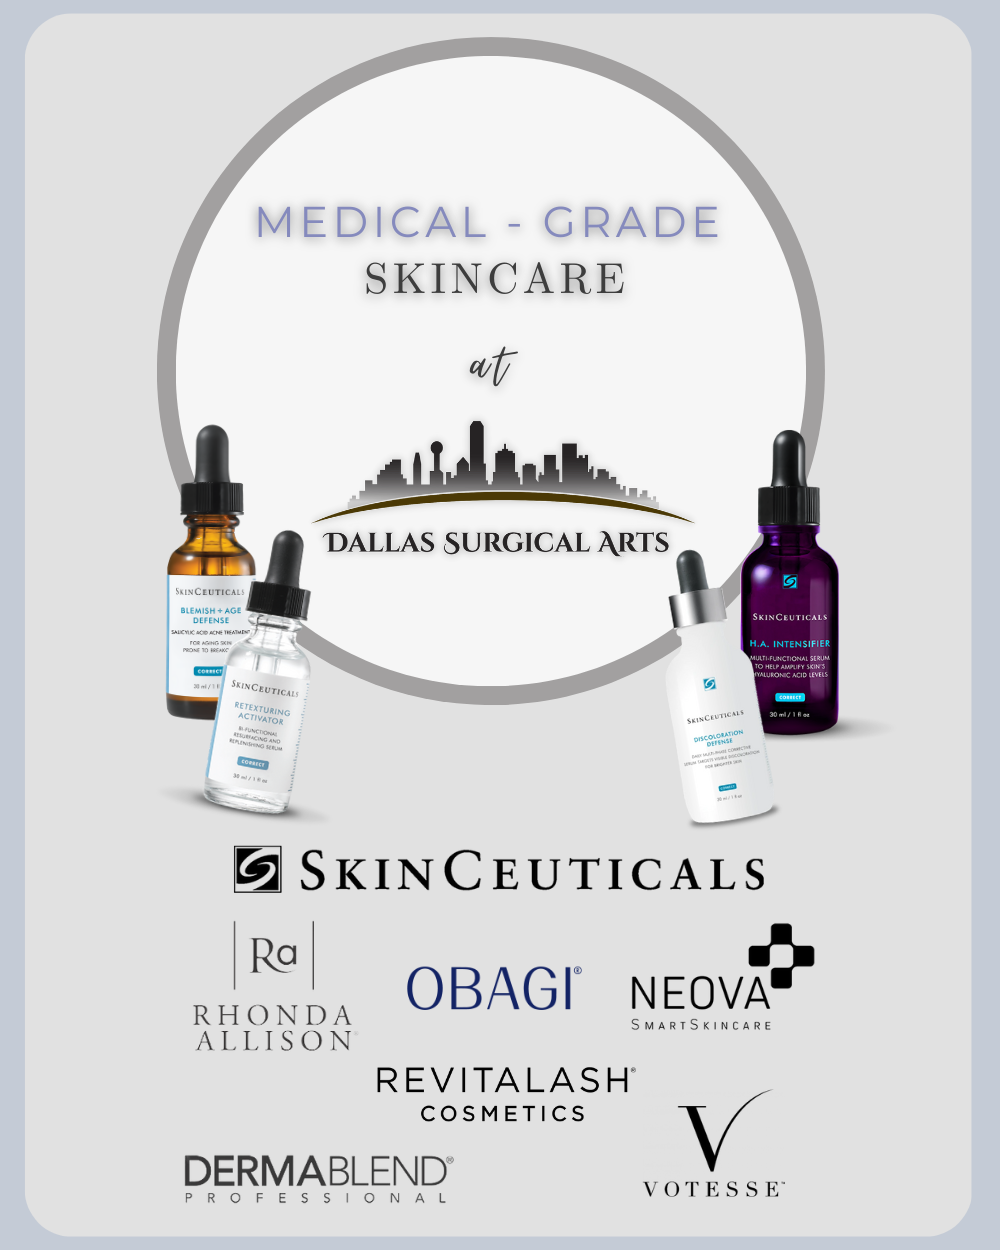 Medical Grade Skincare At Dallas Surgical Arts 2